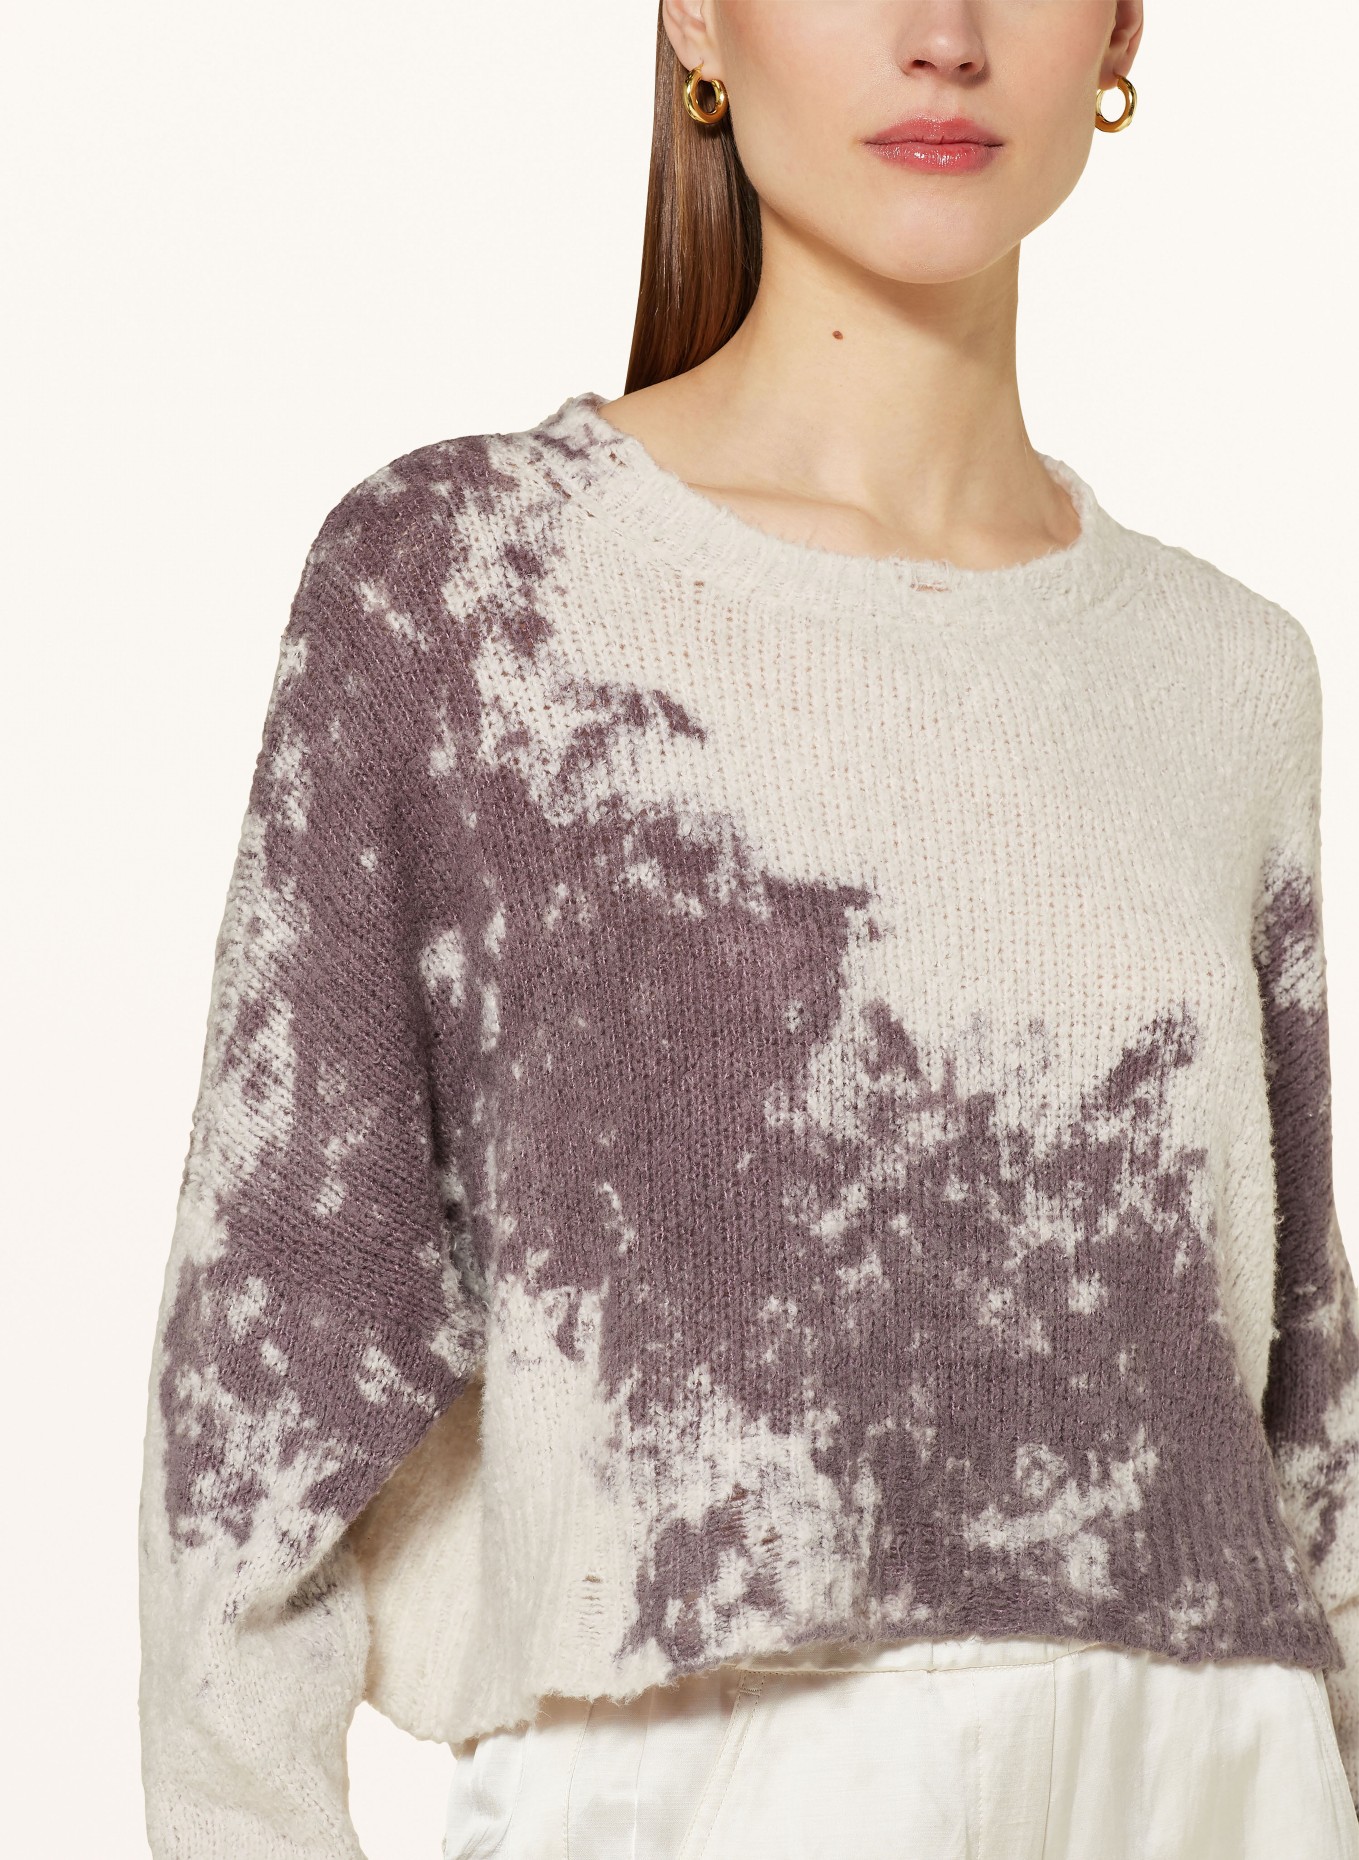 AVANT TOI Cropped-Pullover, Farbe: 18 lavender  grau lavendel (Bild 4)